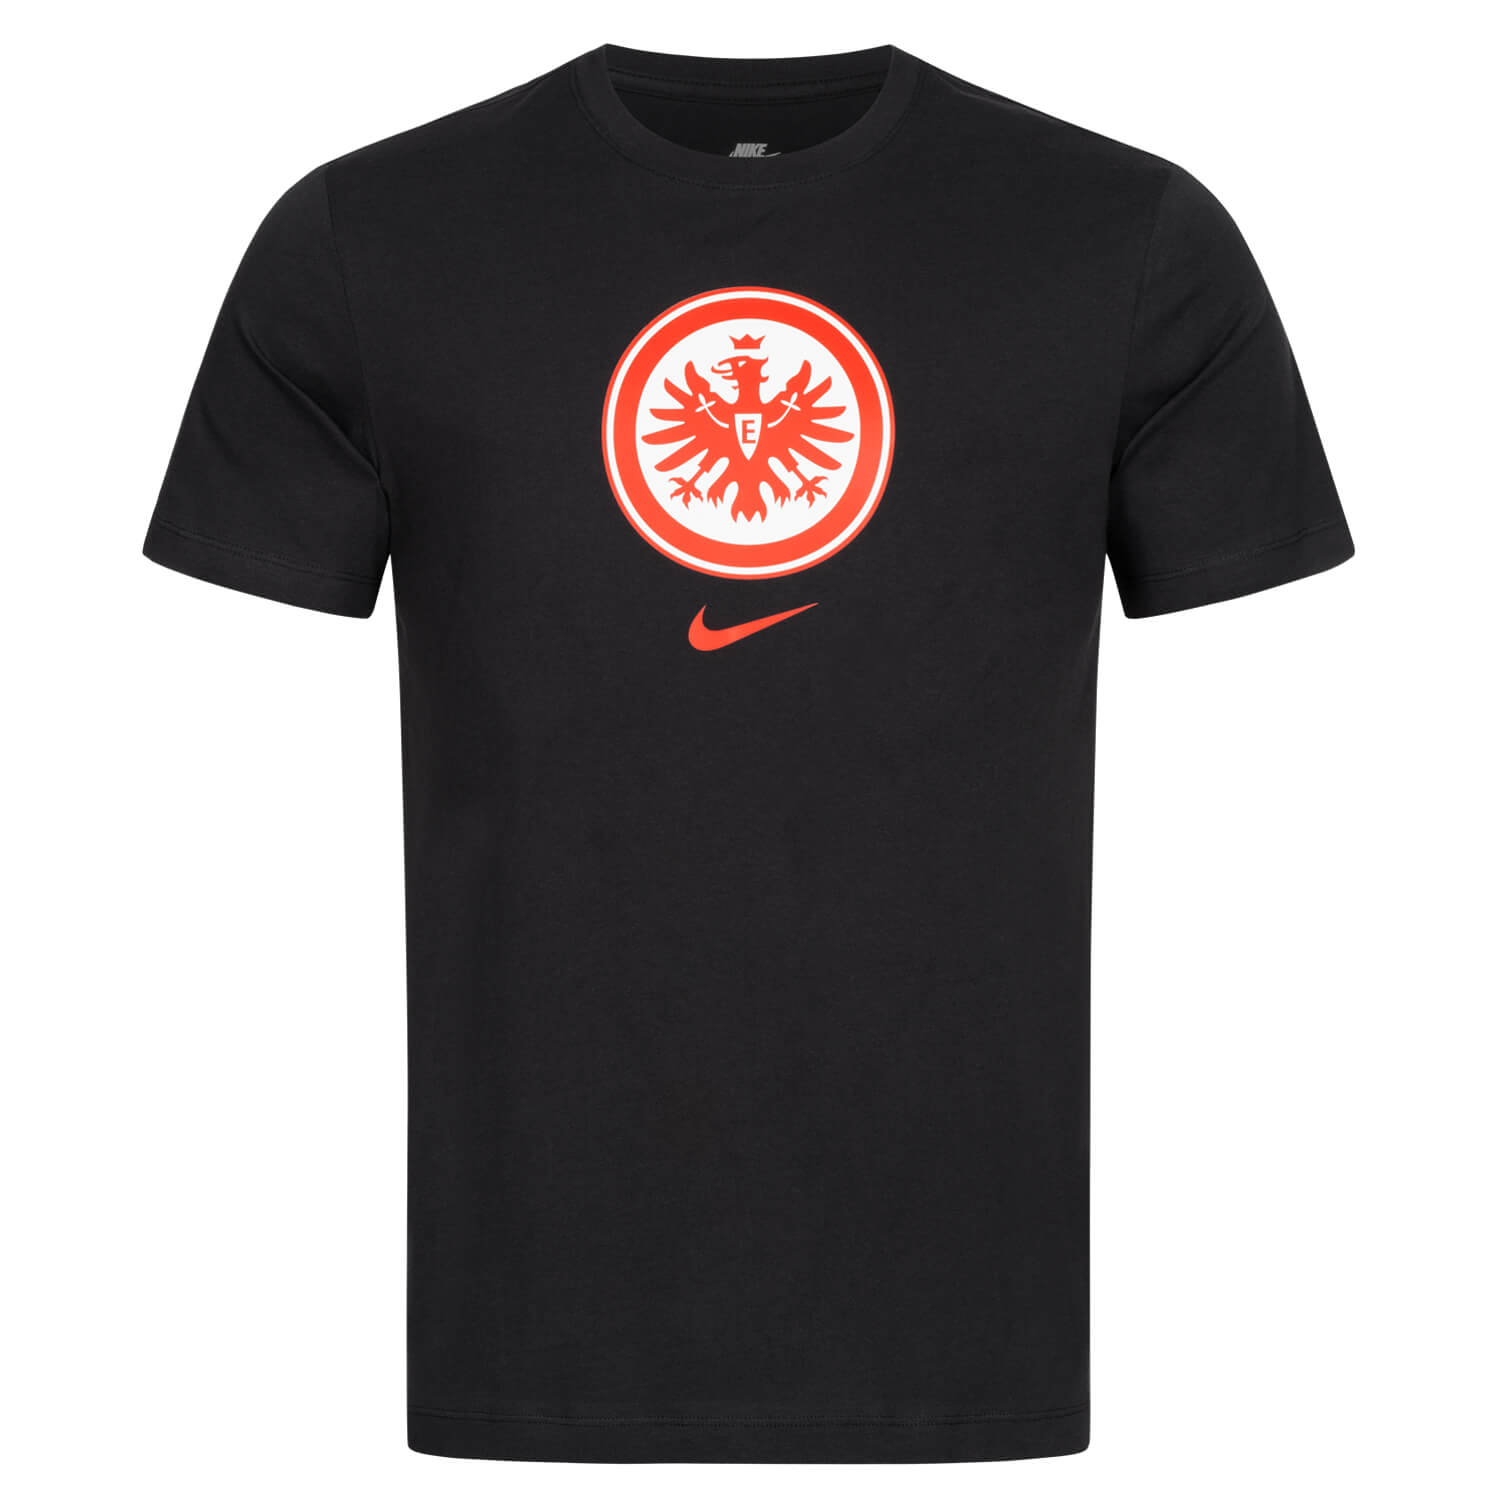 Bild 1: Nike T-Shirt 23 schwarz